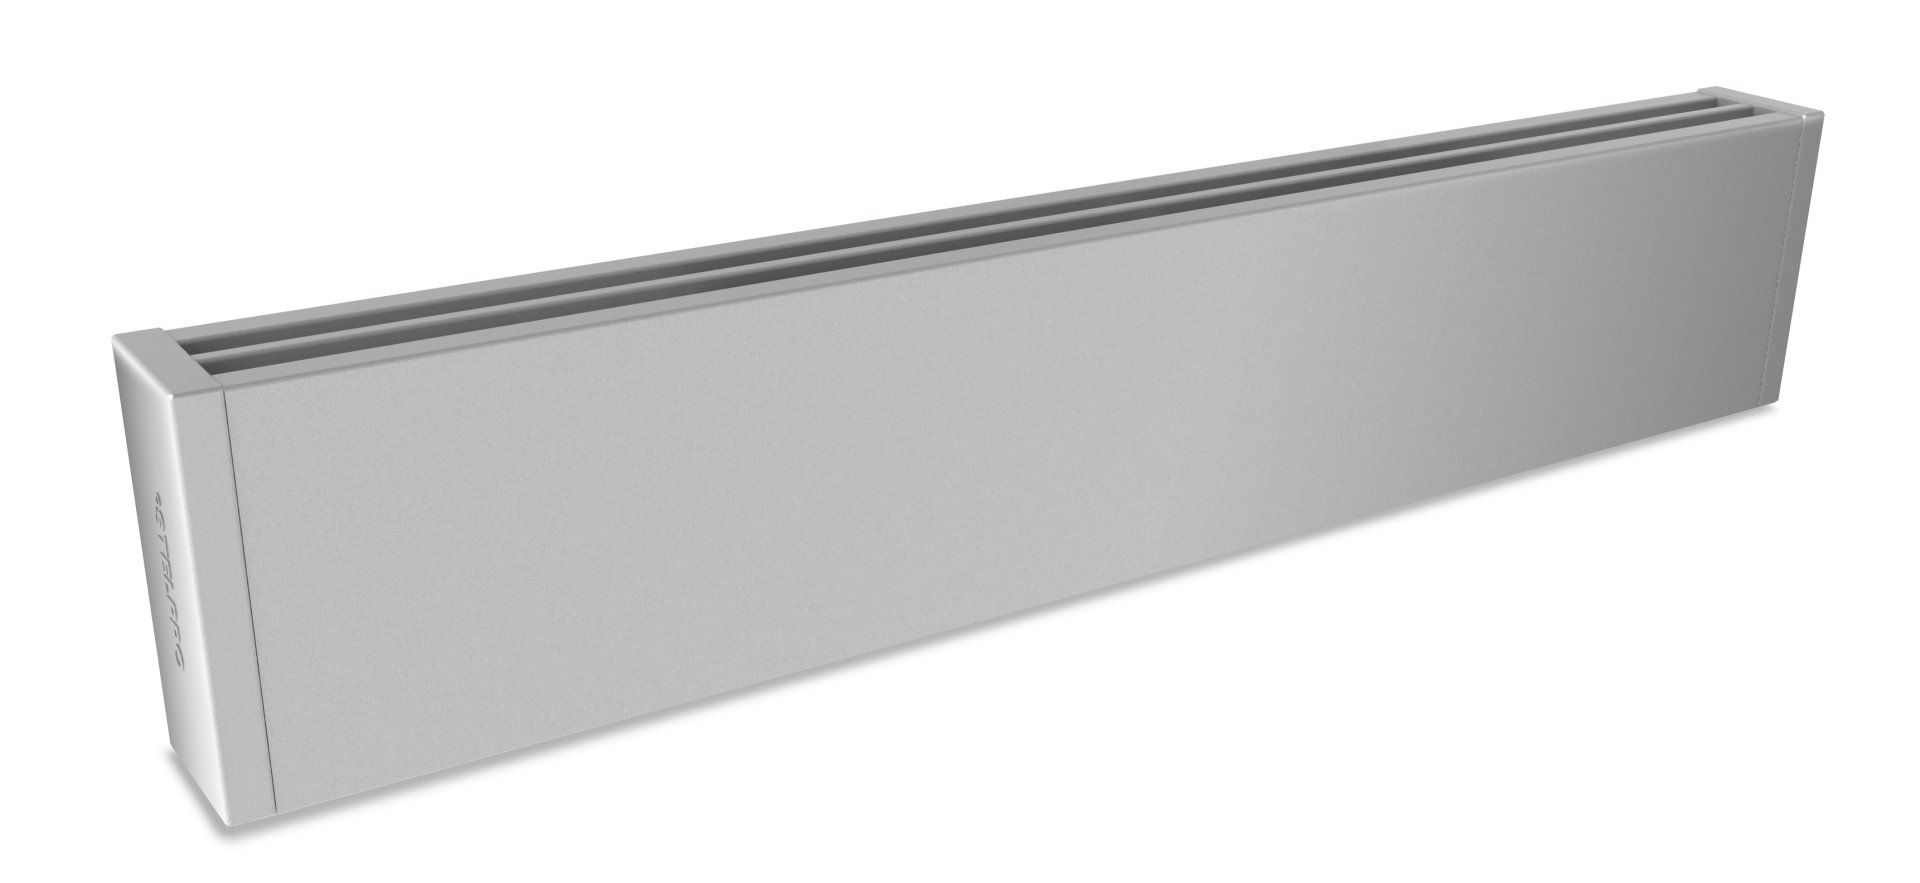 Stelpro - ALUX1 Aluminum Baseboard Heater